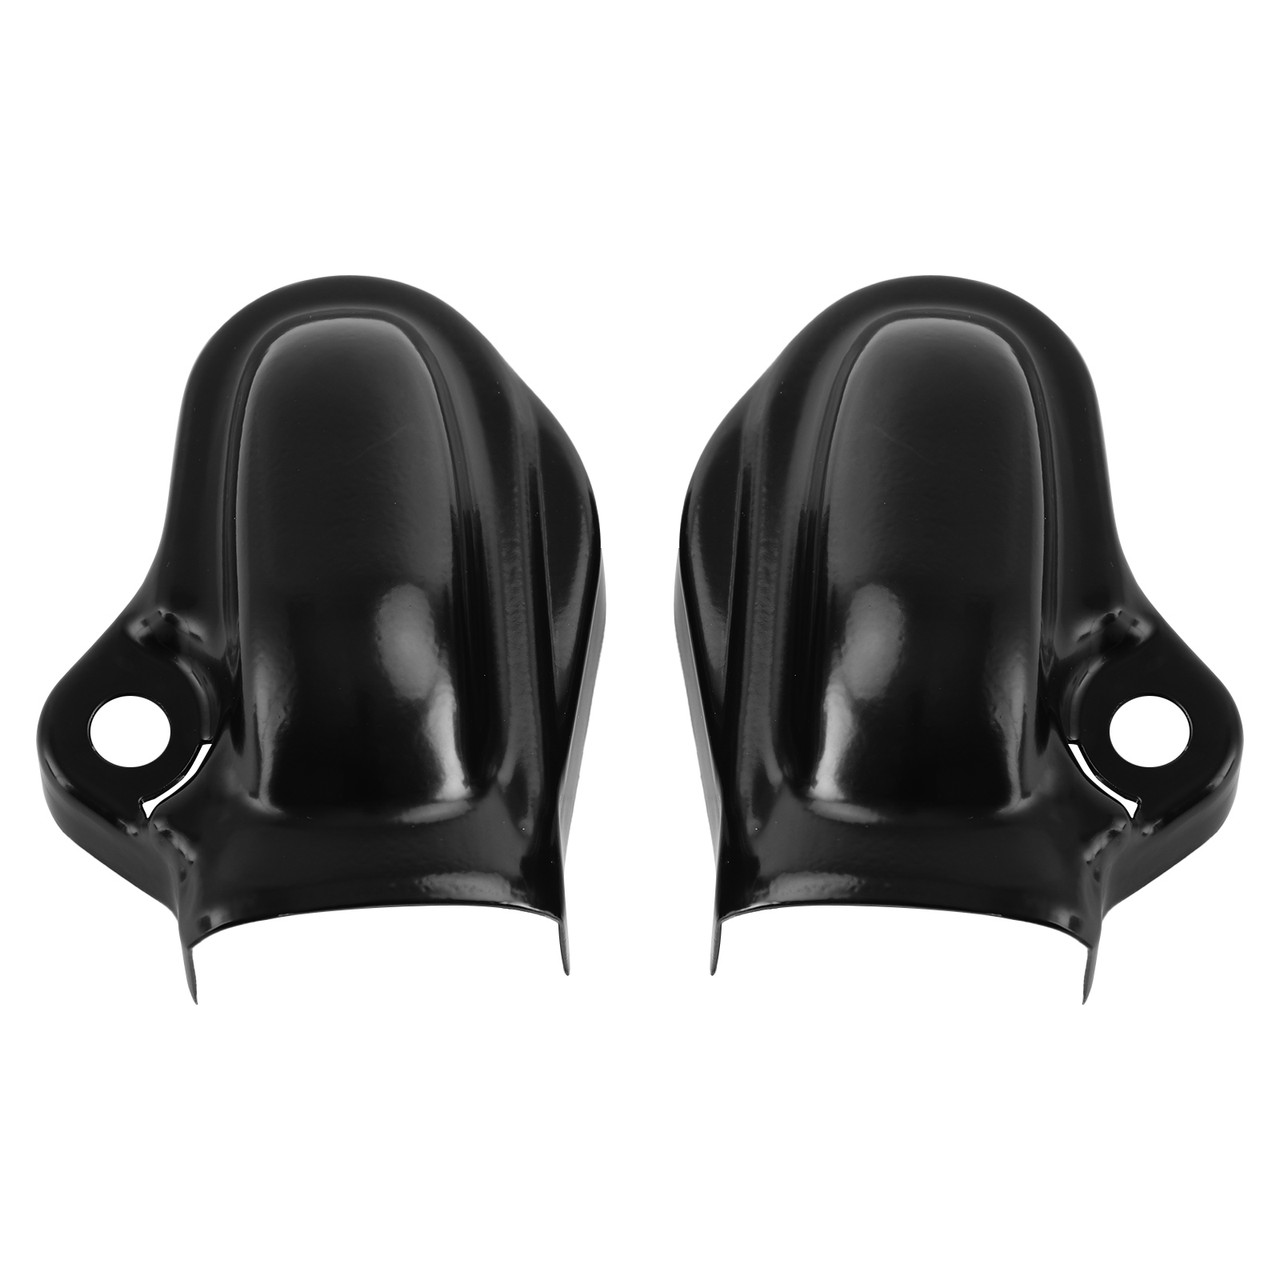 Rear Bar Shield Axle Nut Covers Fits for Harley V-Rod VRSC models 2002-2017 Black